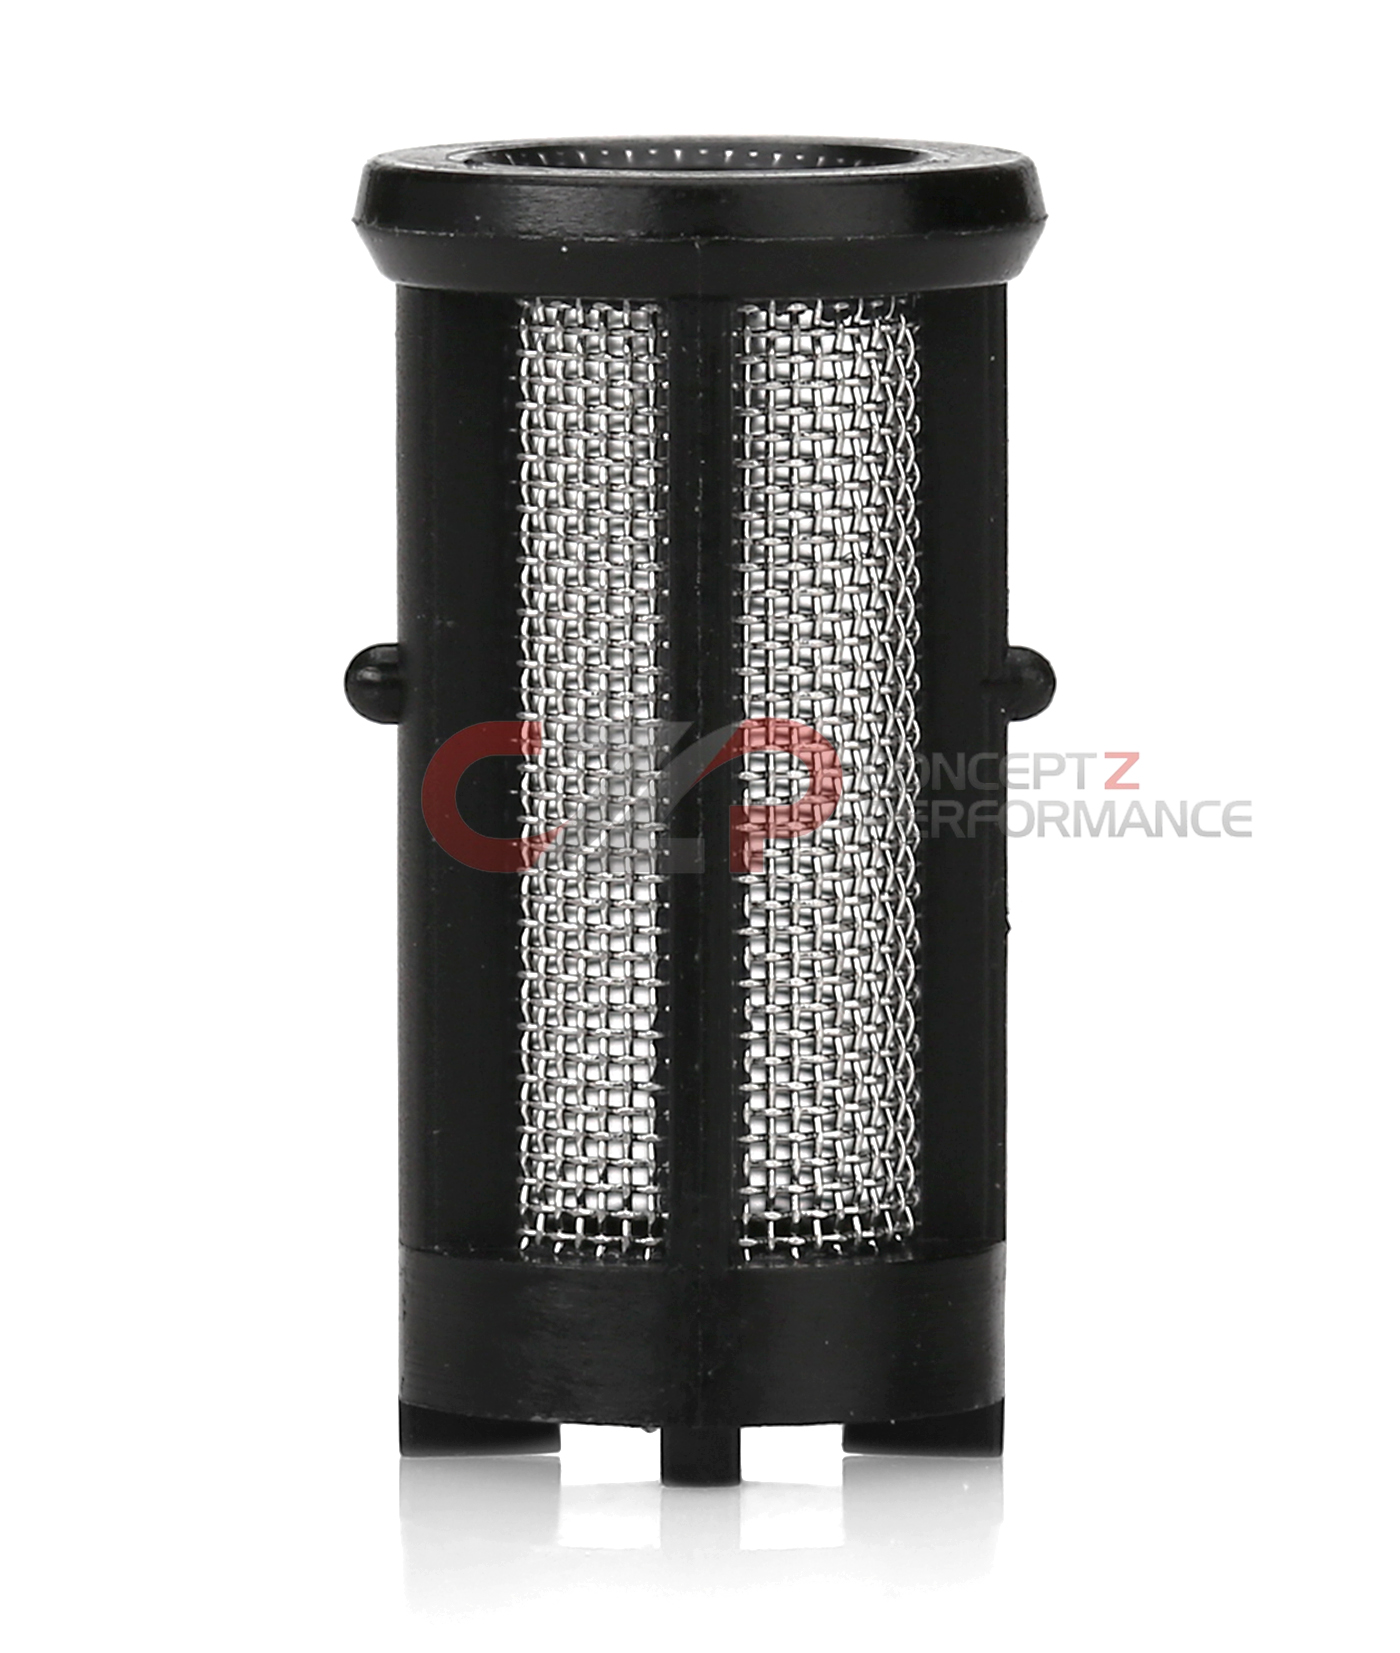 Nissan OEM Cylinder Head Oil Filter Screen, VQ37VHR - Nissan 370Z / Infiniti G37